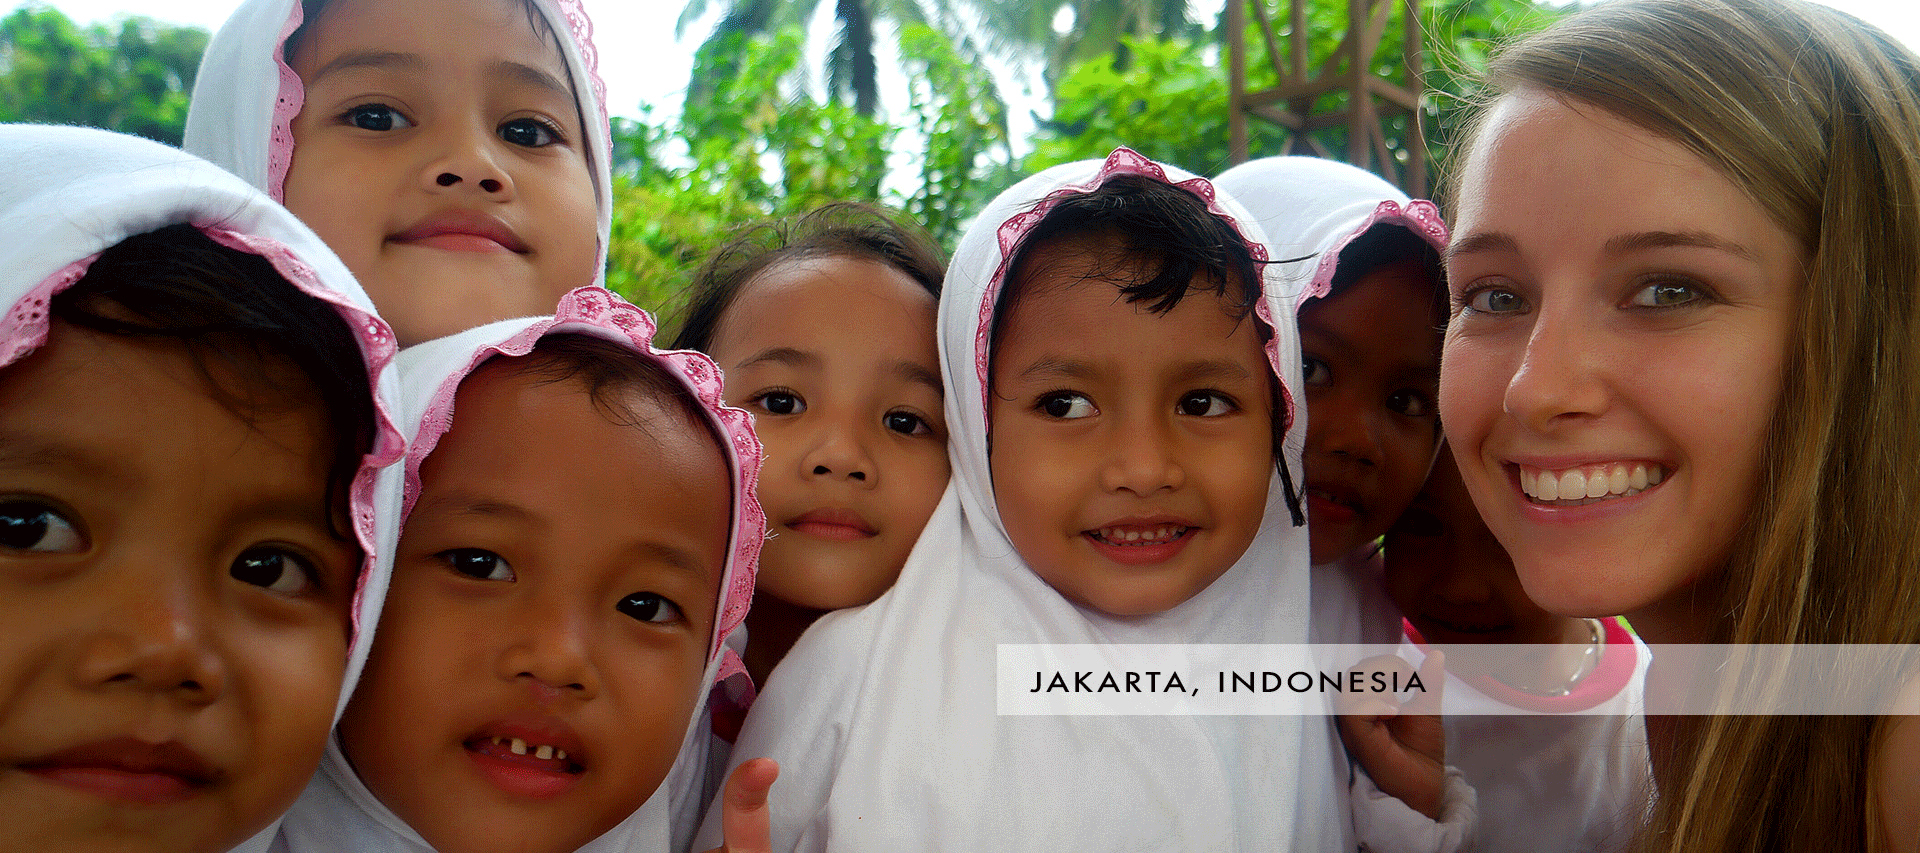 Sarah Dodd visits with schoolchildren in Indonesia. Photo courtesy of Sarah Dodd.